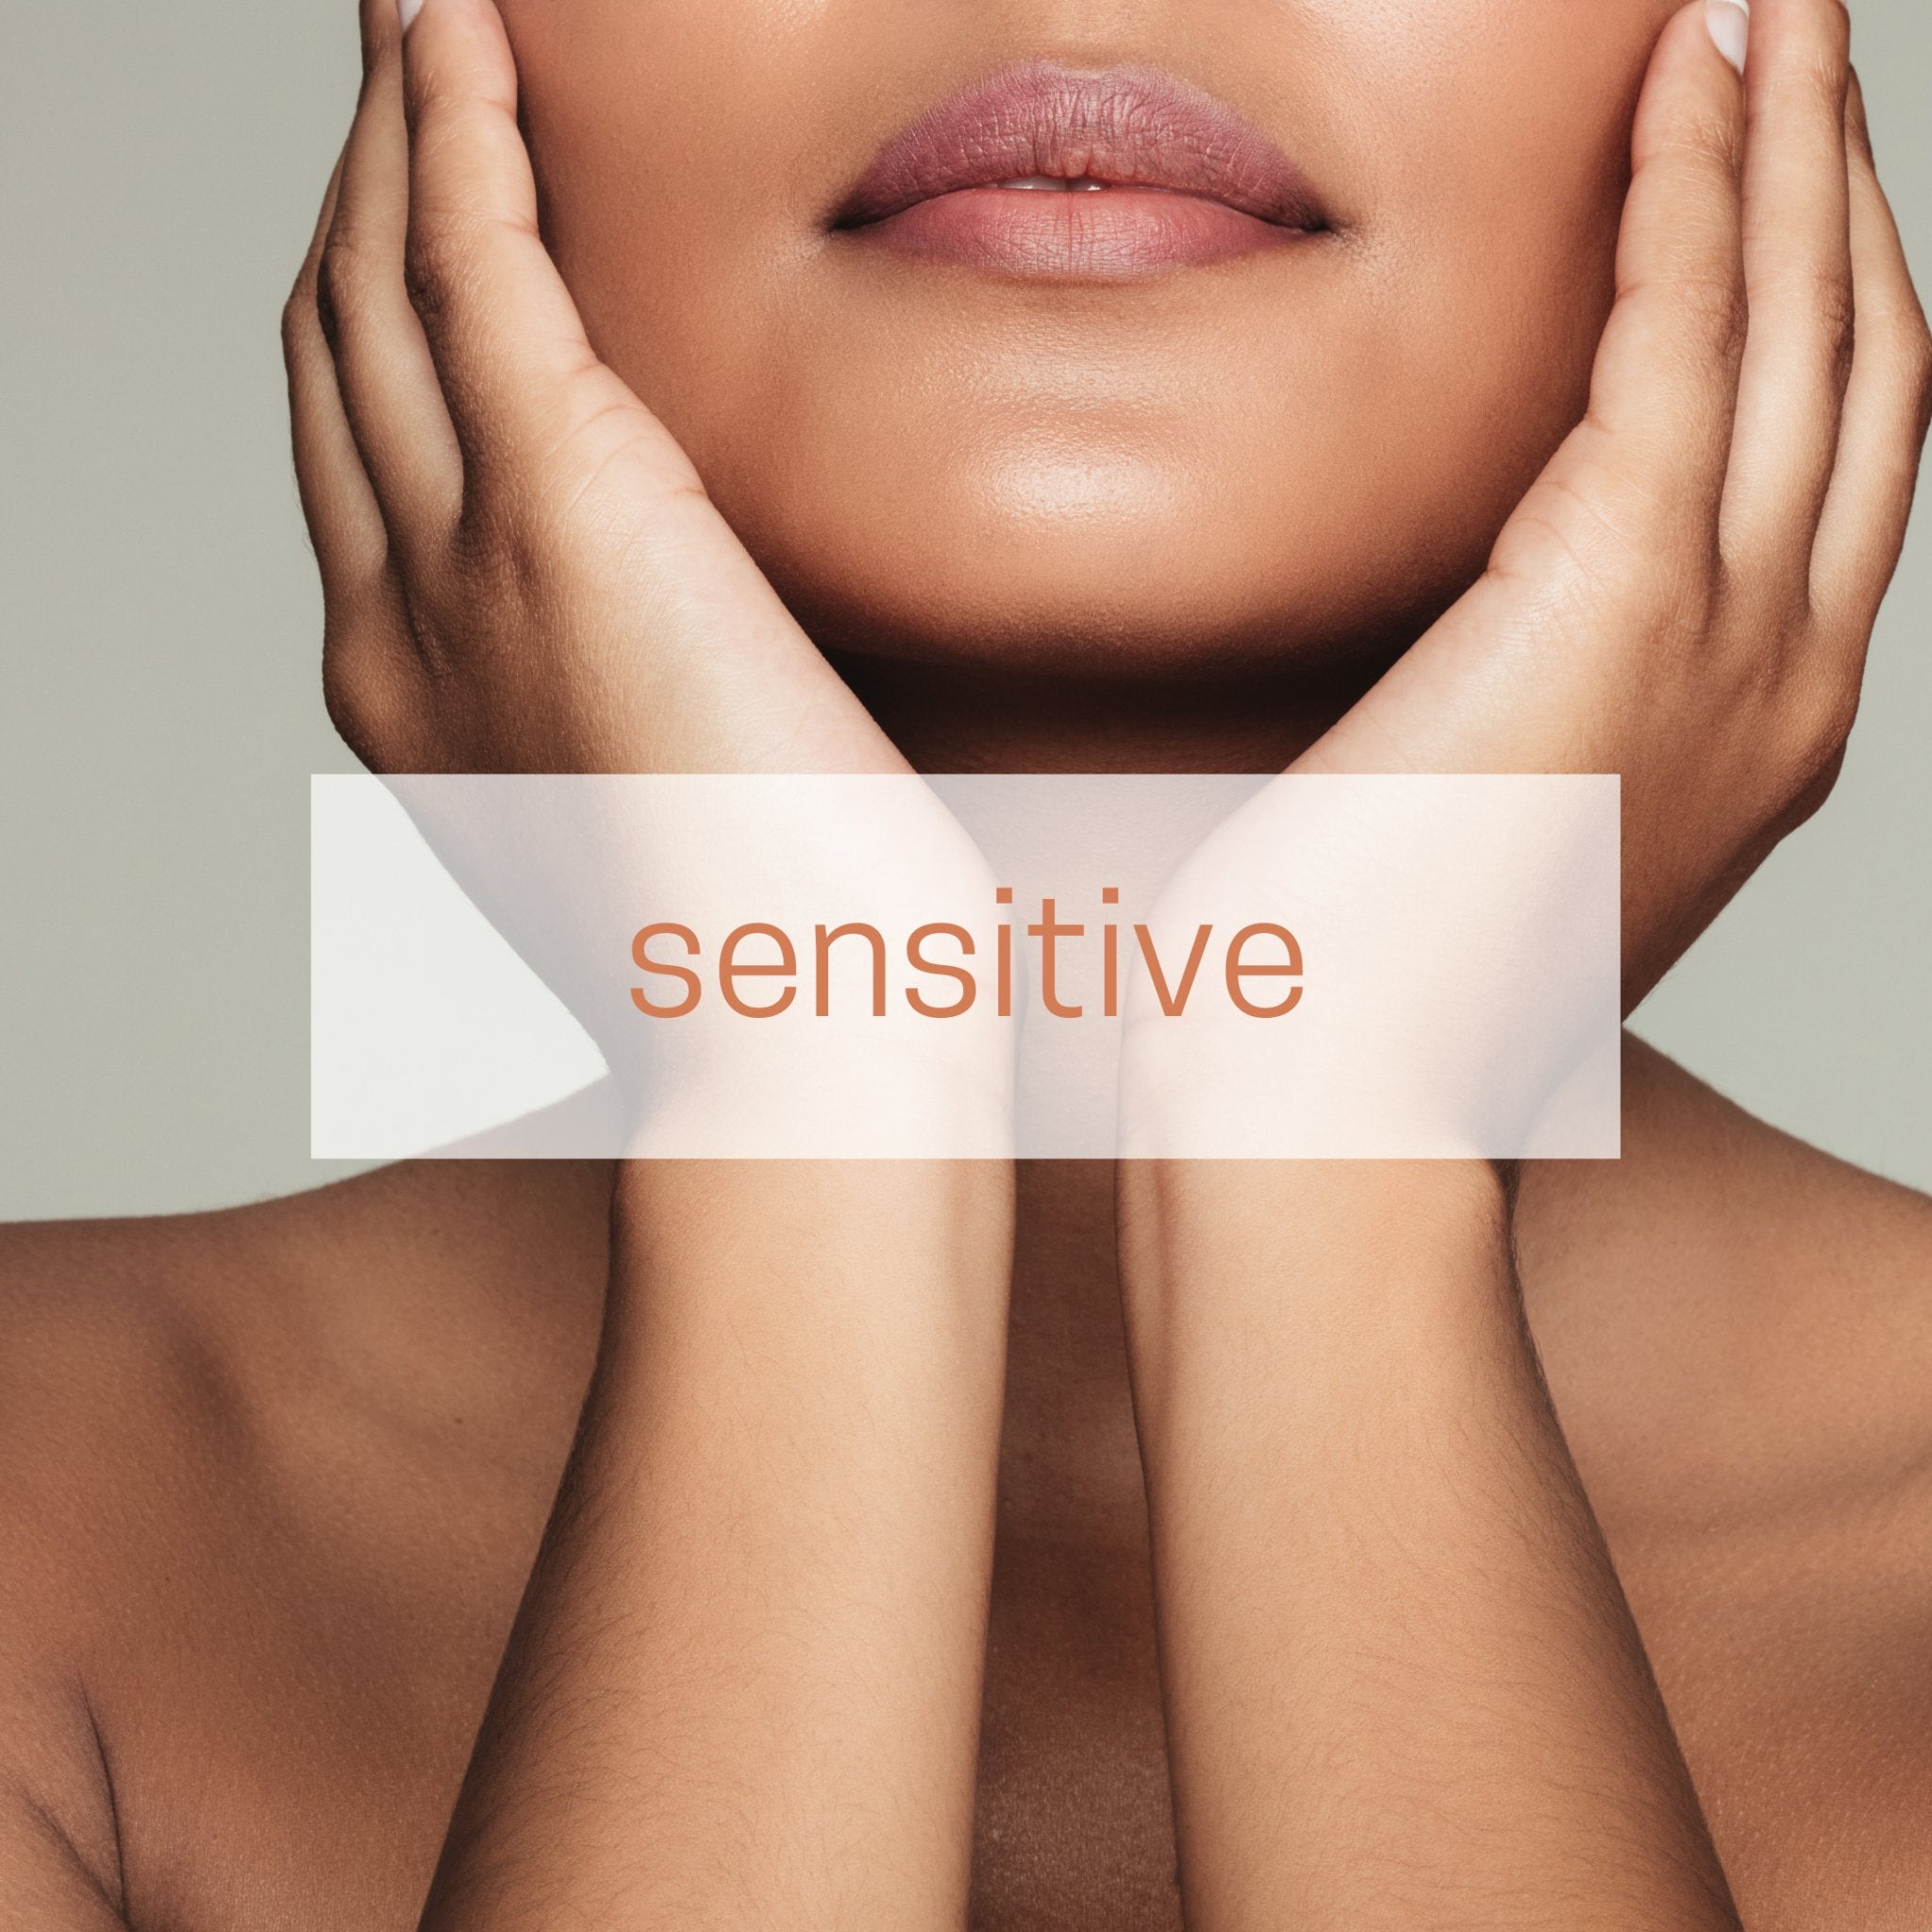 Sensitive Skin - Gressa Skin